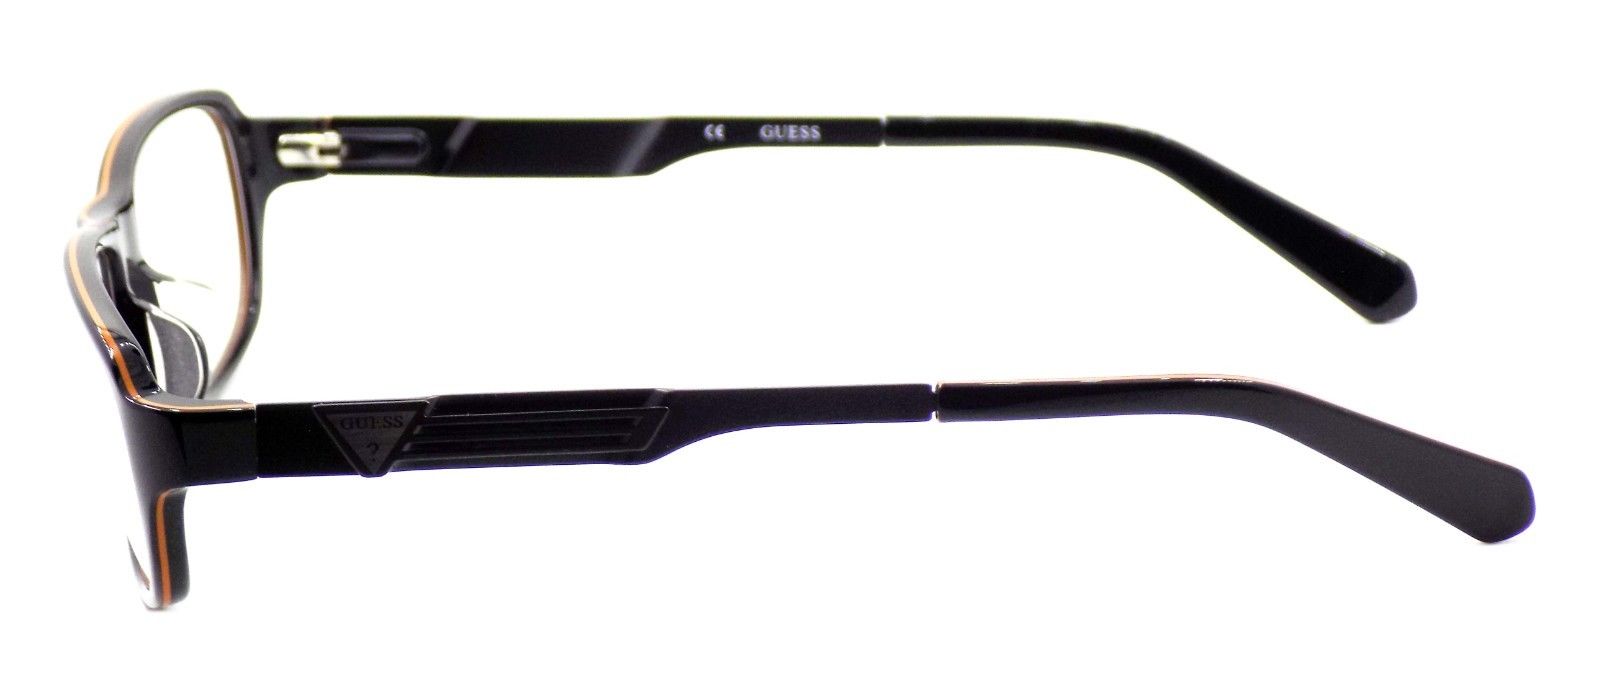 3-GUESS GUA1779 BLK Men's ASIAN Fit Eyeglasses Frames 55-17-145 Black + CASE-715583723894-IKSpecs